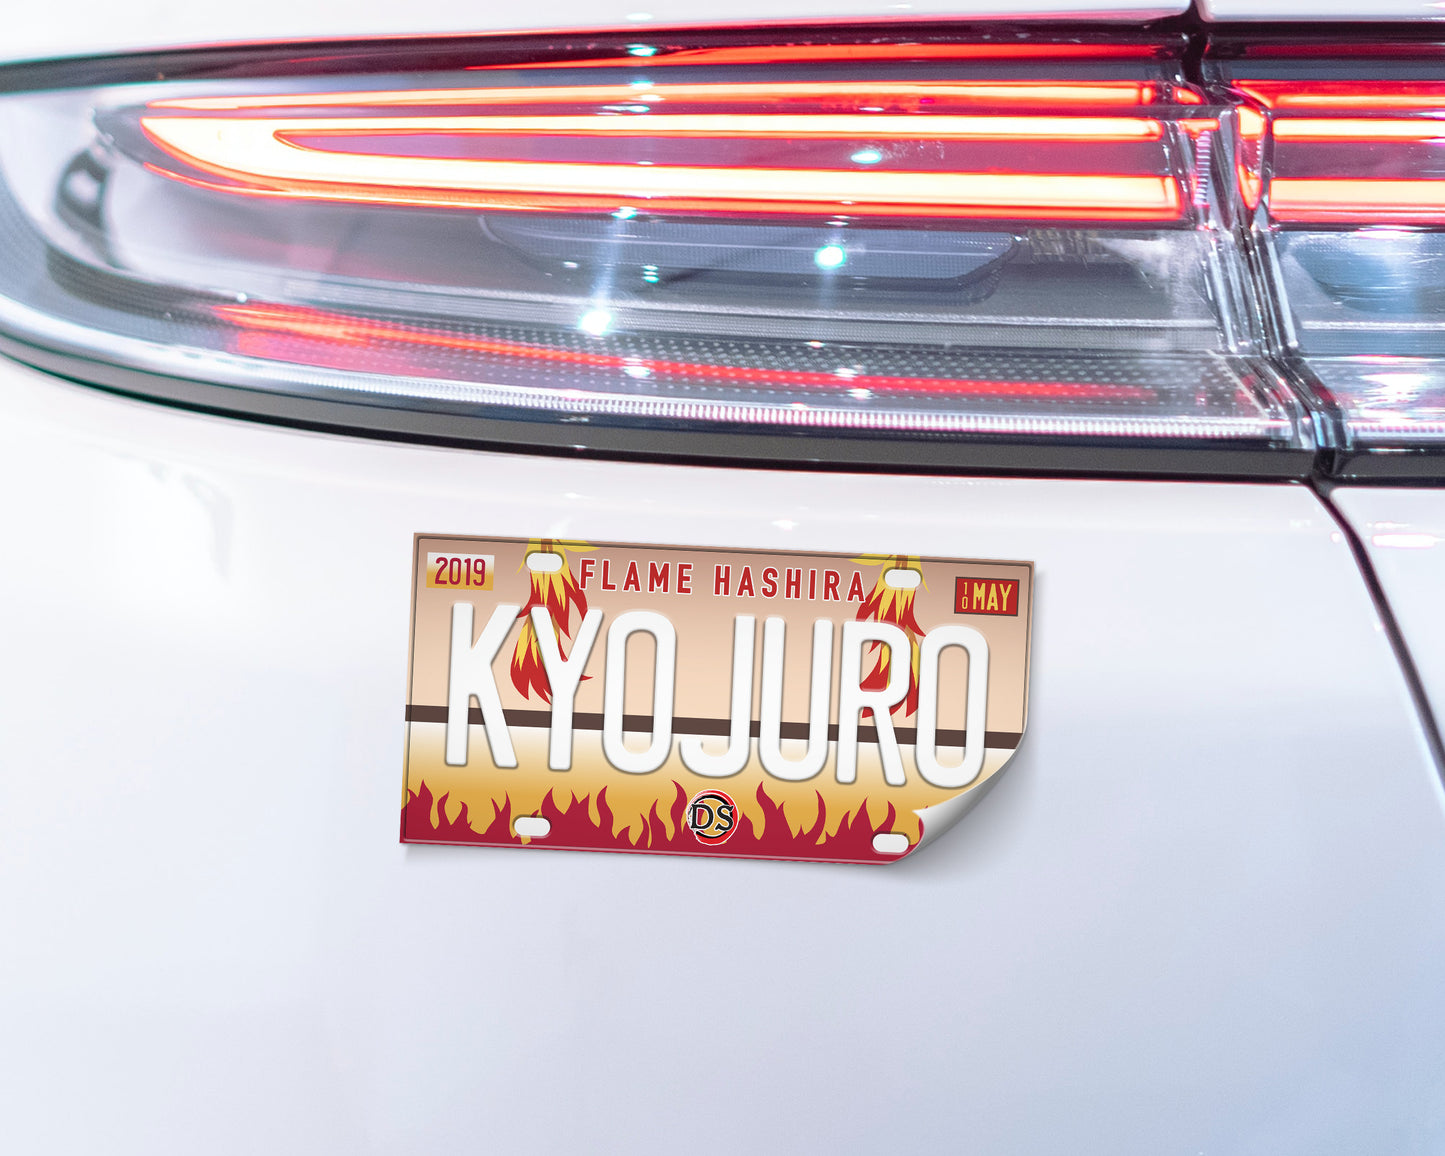 Kyojuro bumper sticker